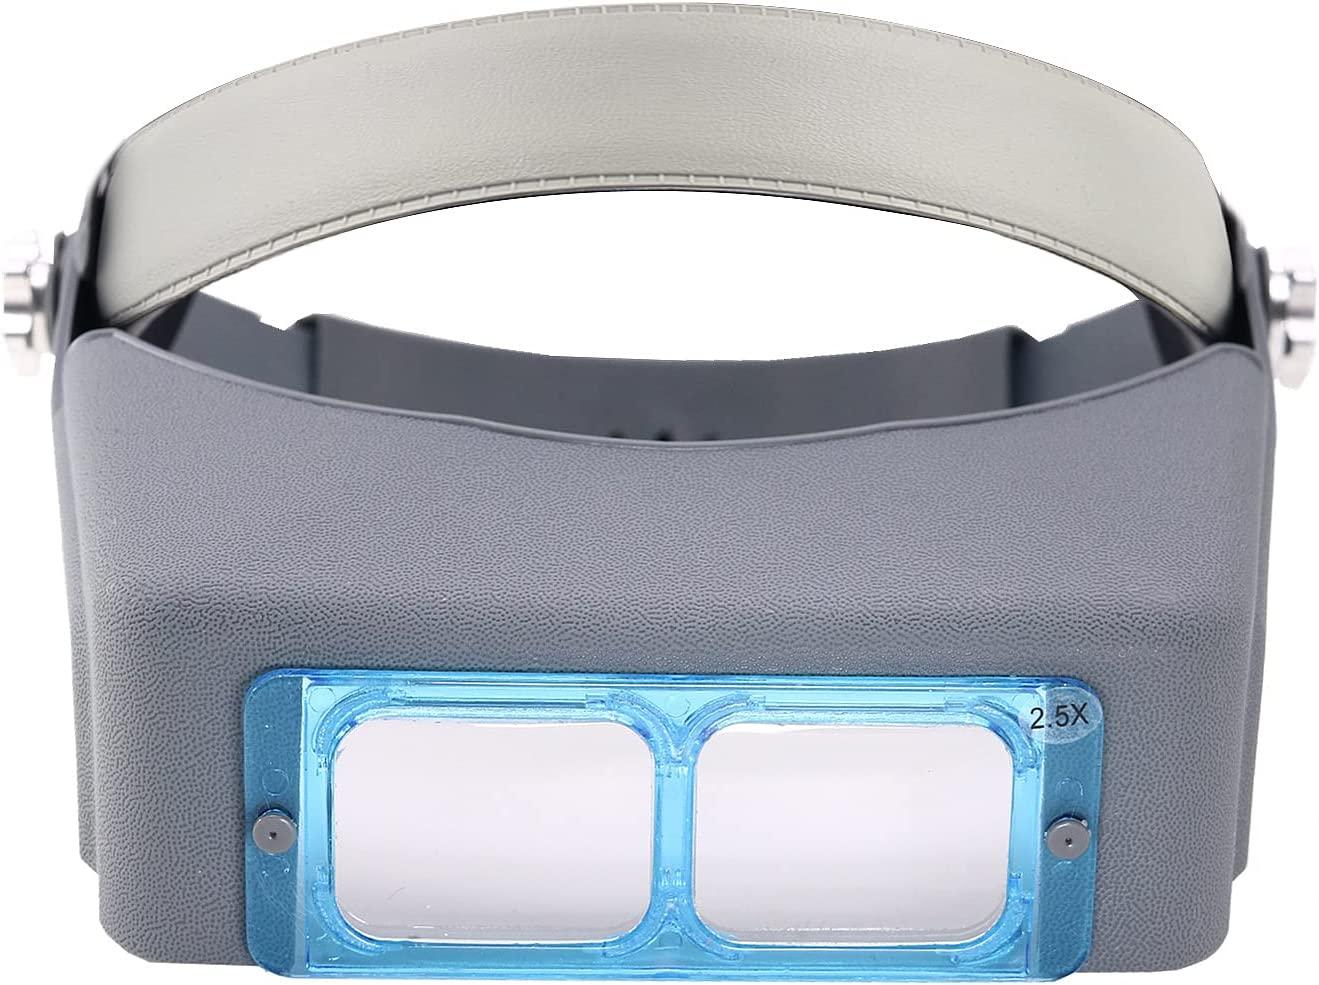 MG81007-B Head Band Magnifier Visor with 4 Real Glass Optical Lens